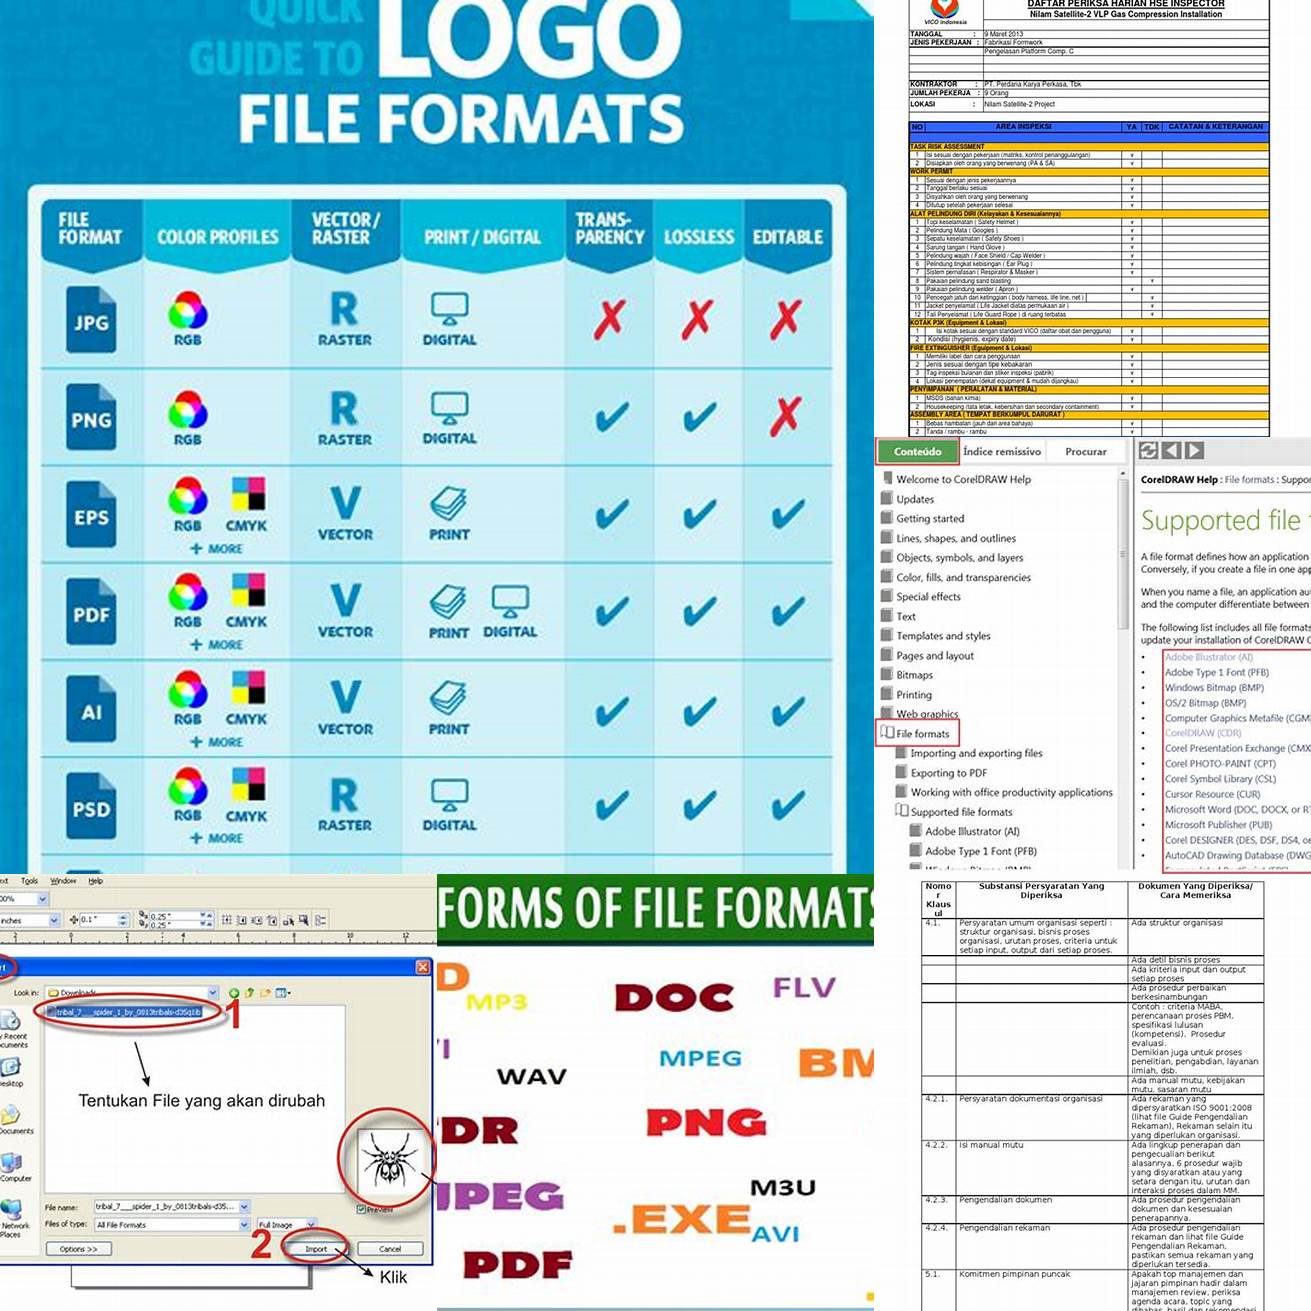 Periksa format file